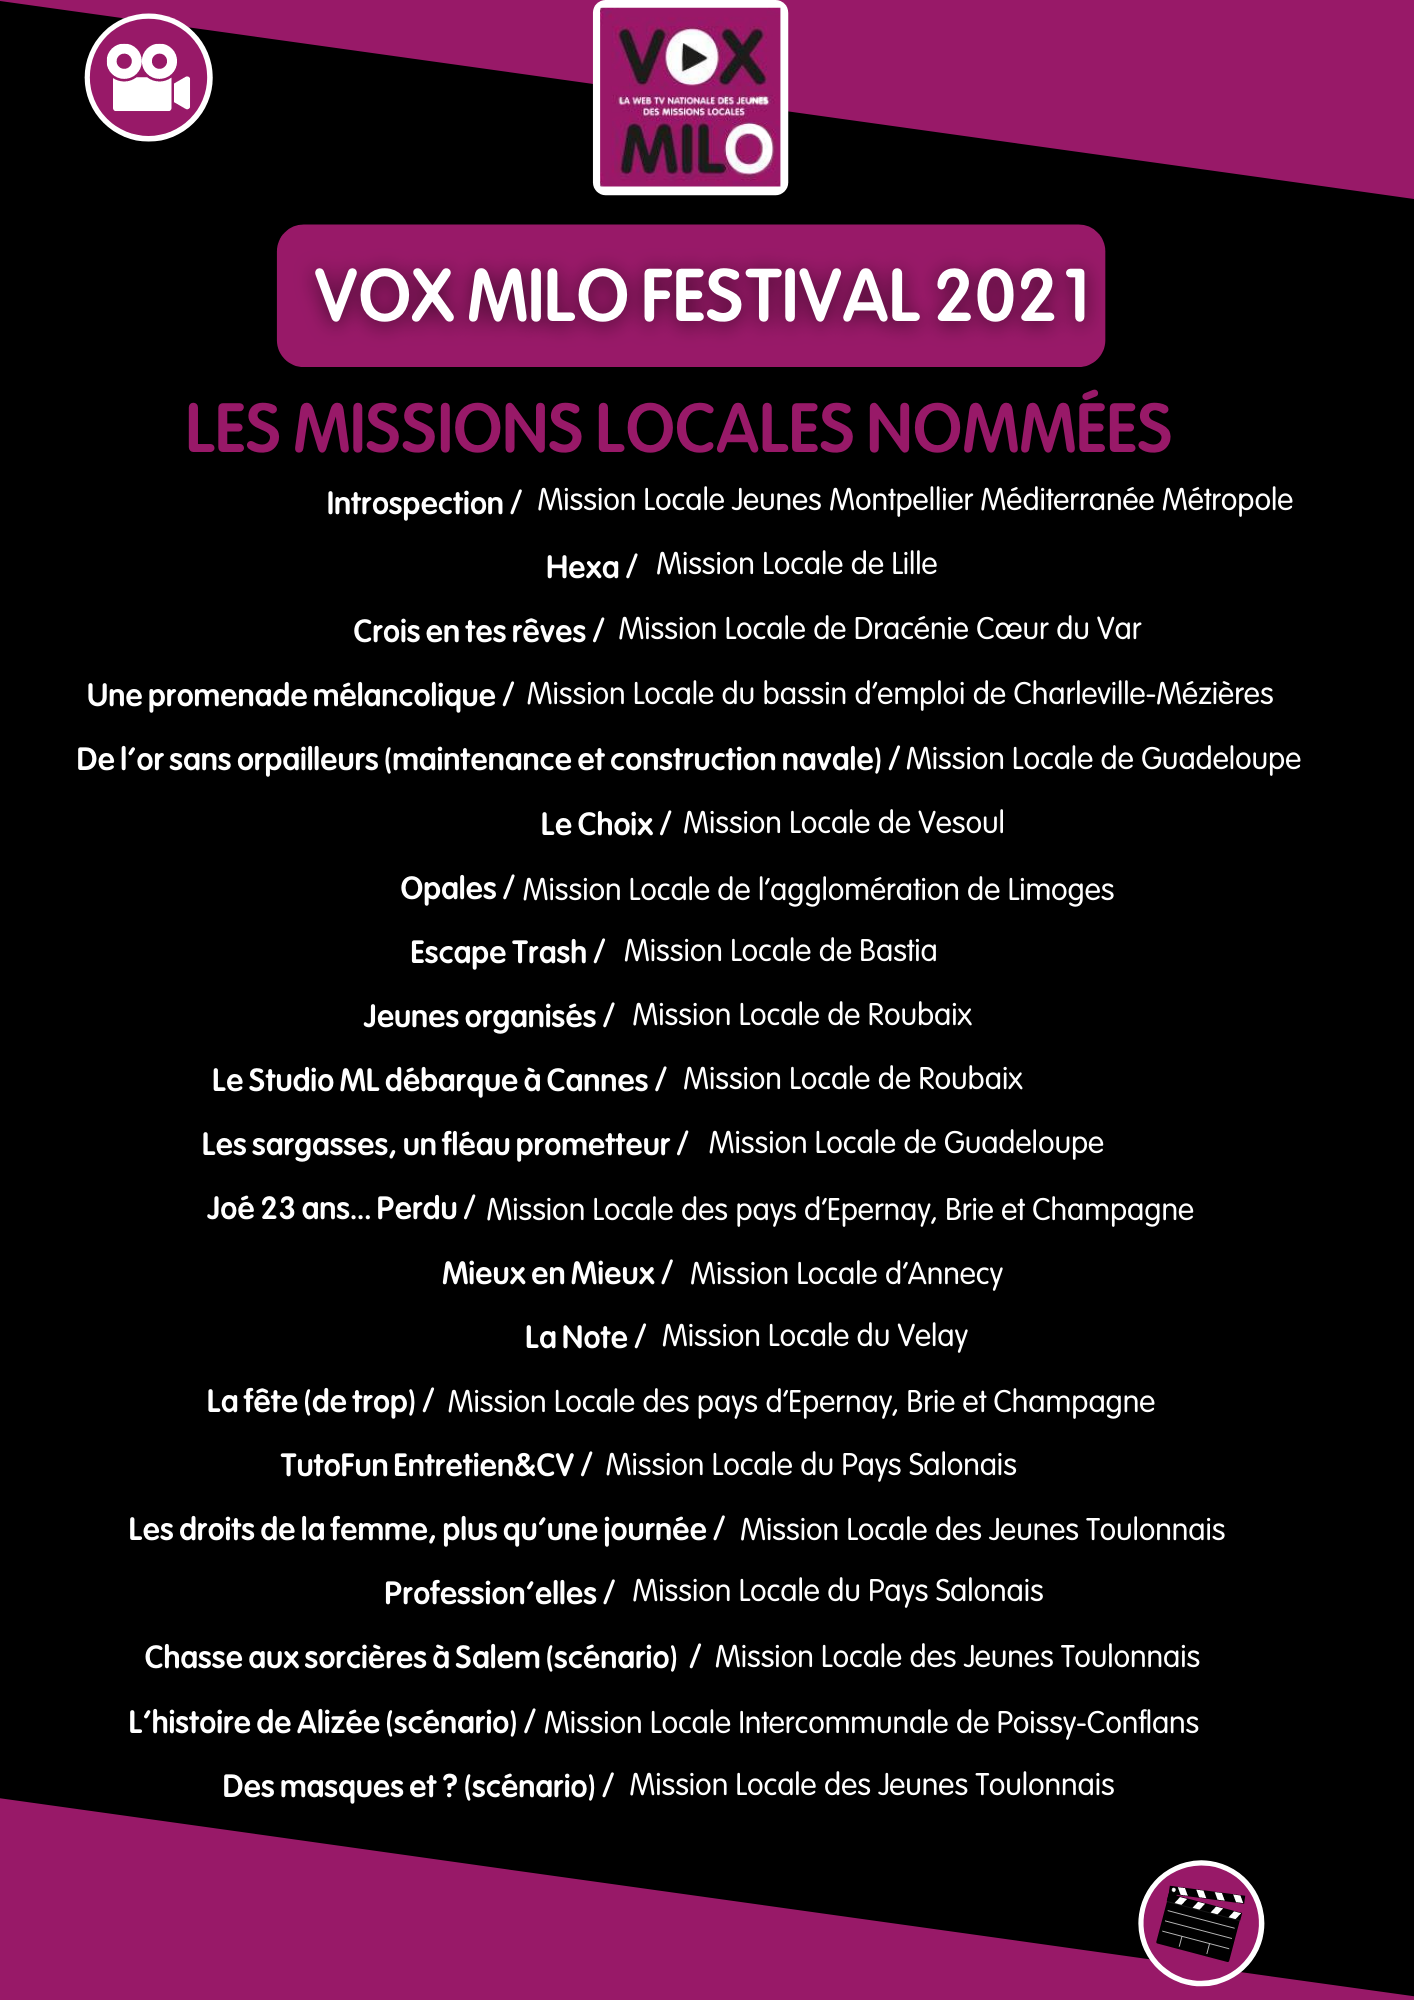 vox-milo-festival-202_mlnommes_liste